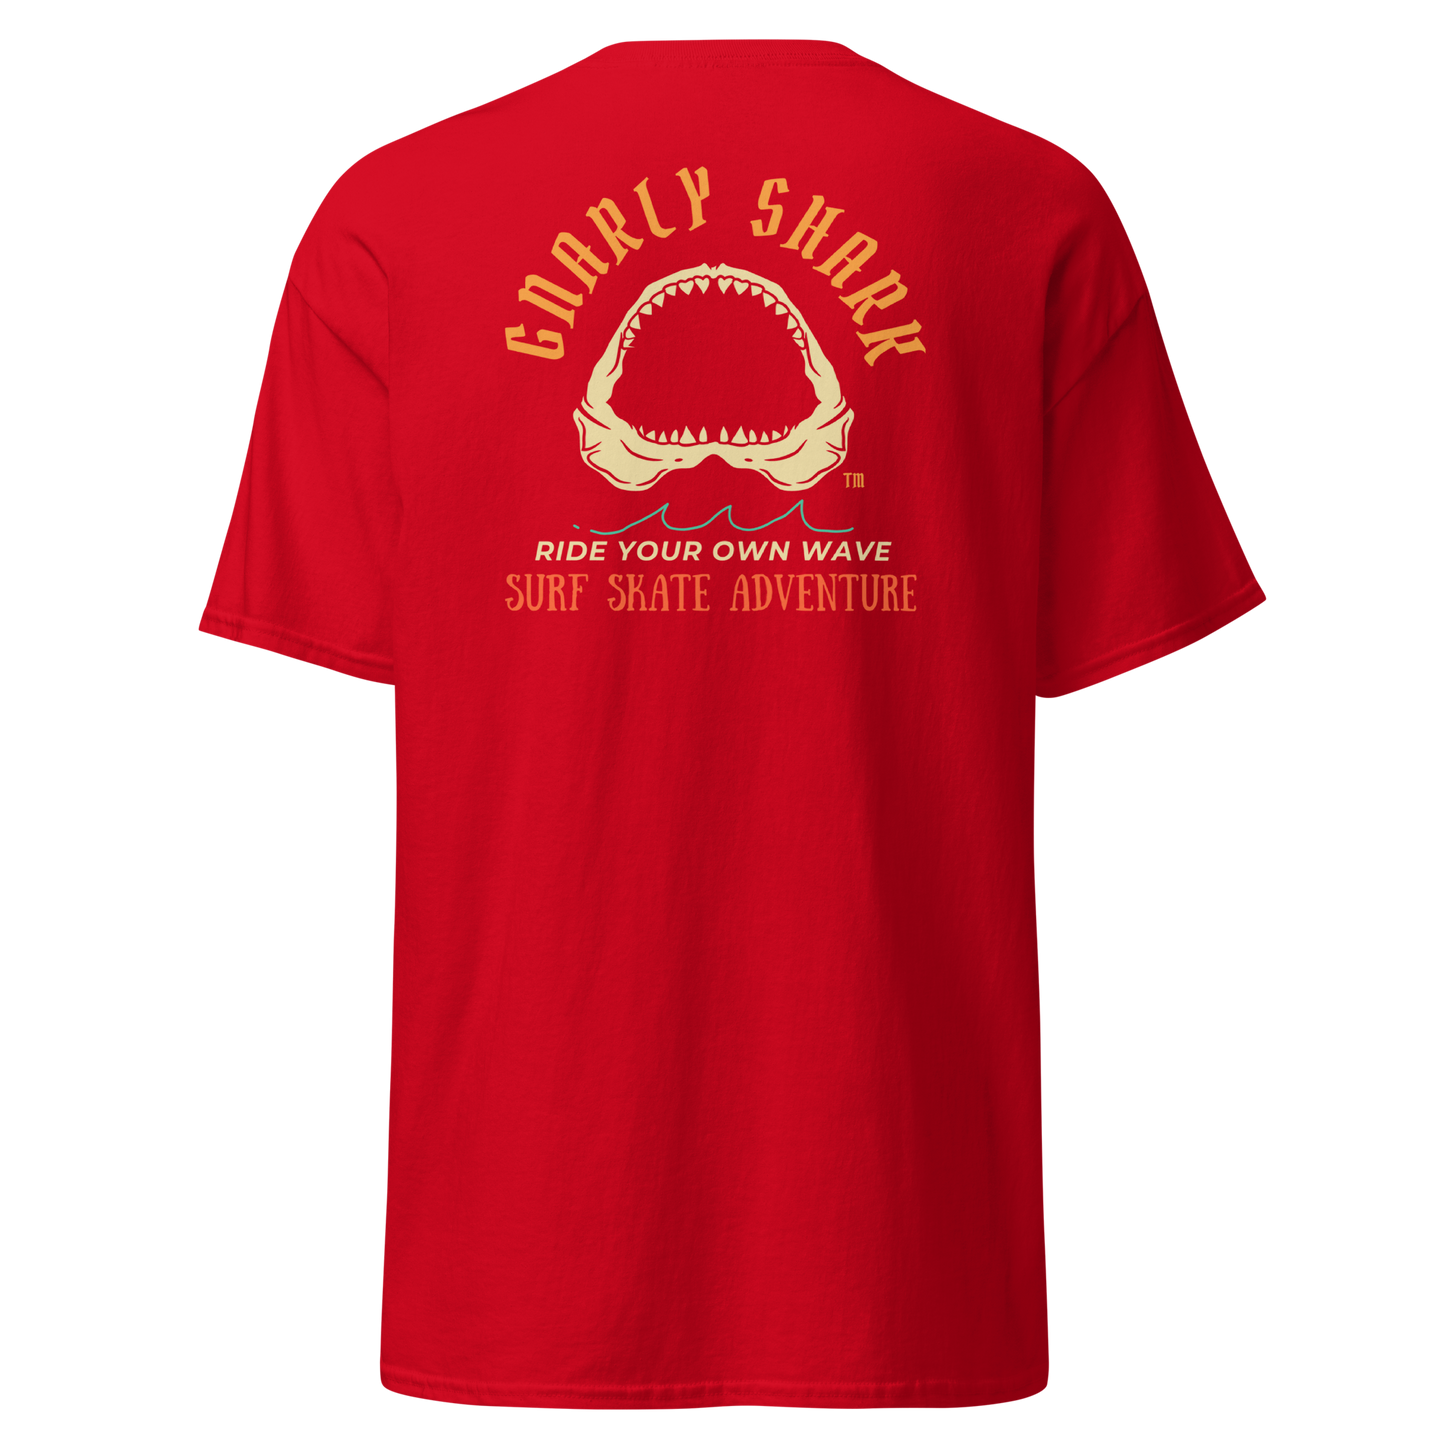 Gnarly Shark Surf Skate Adventure T-Shirt - Front / Back - Gildan classic 5000